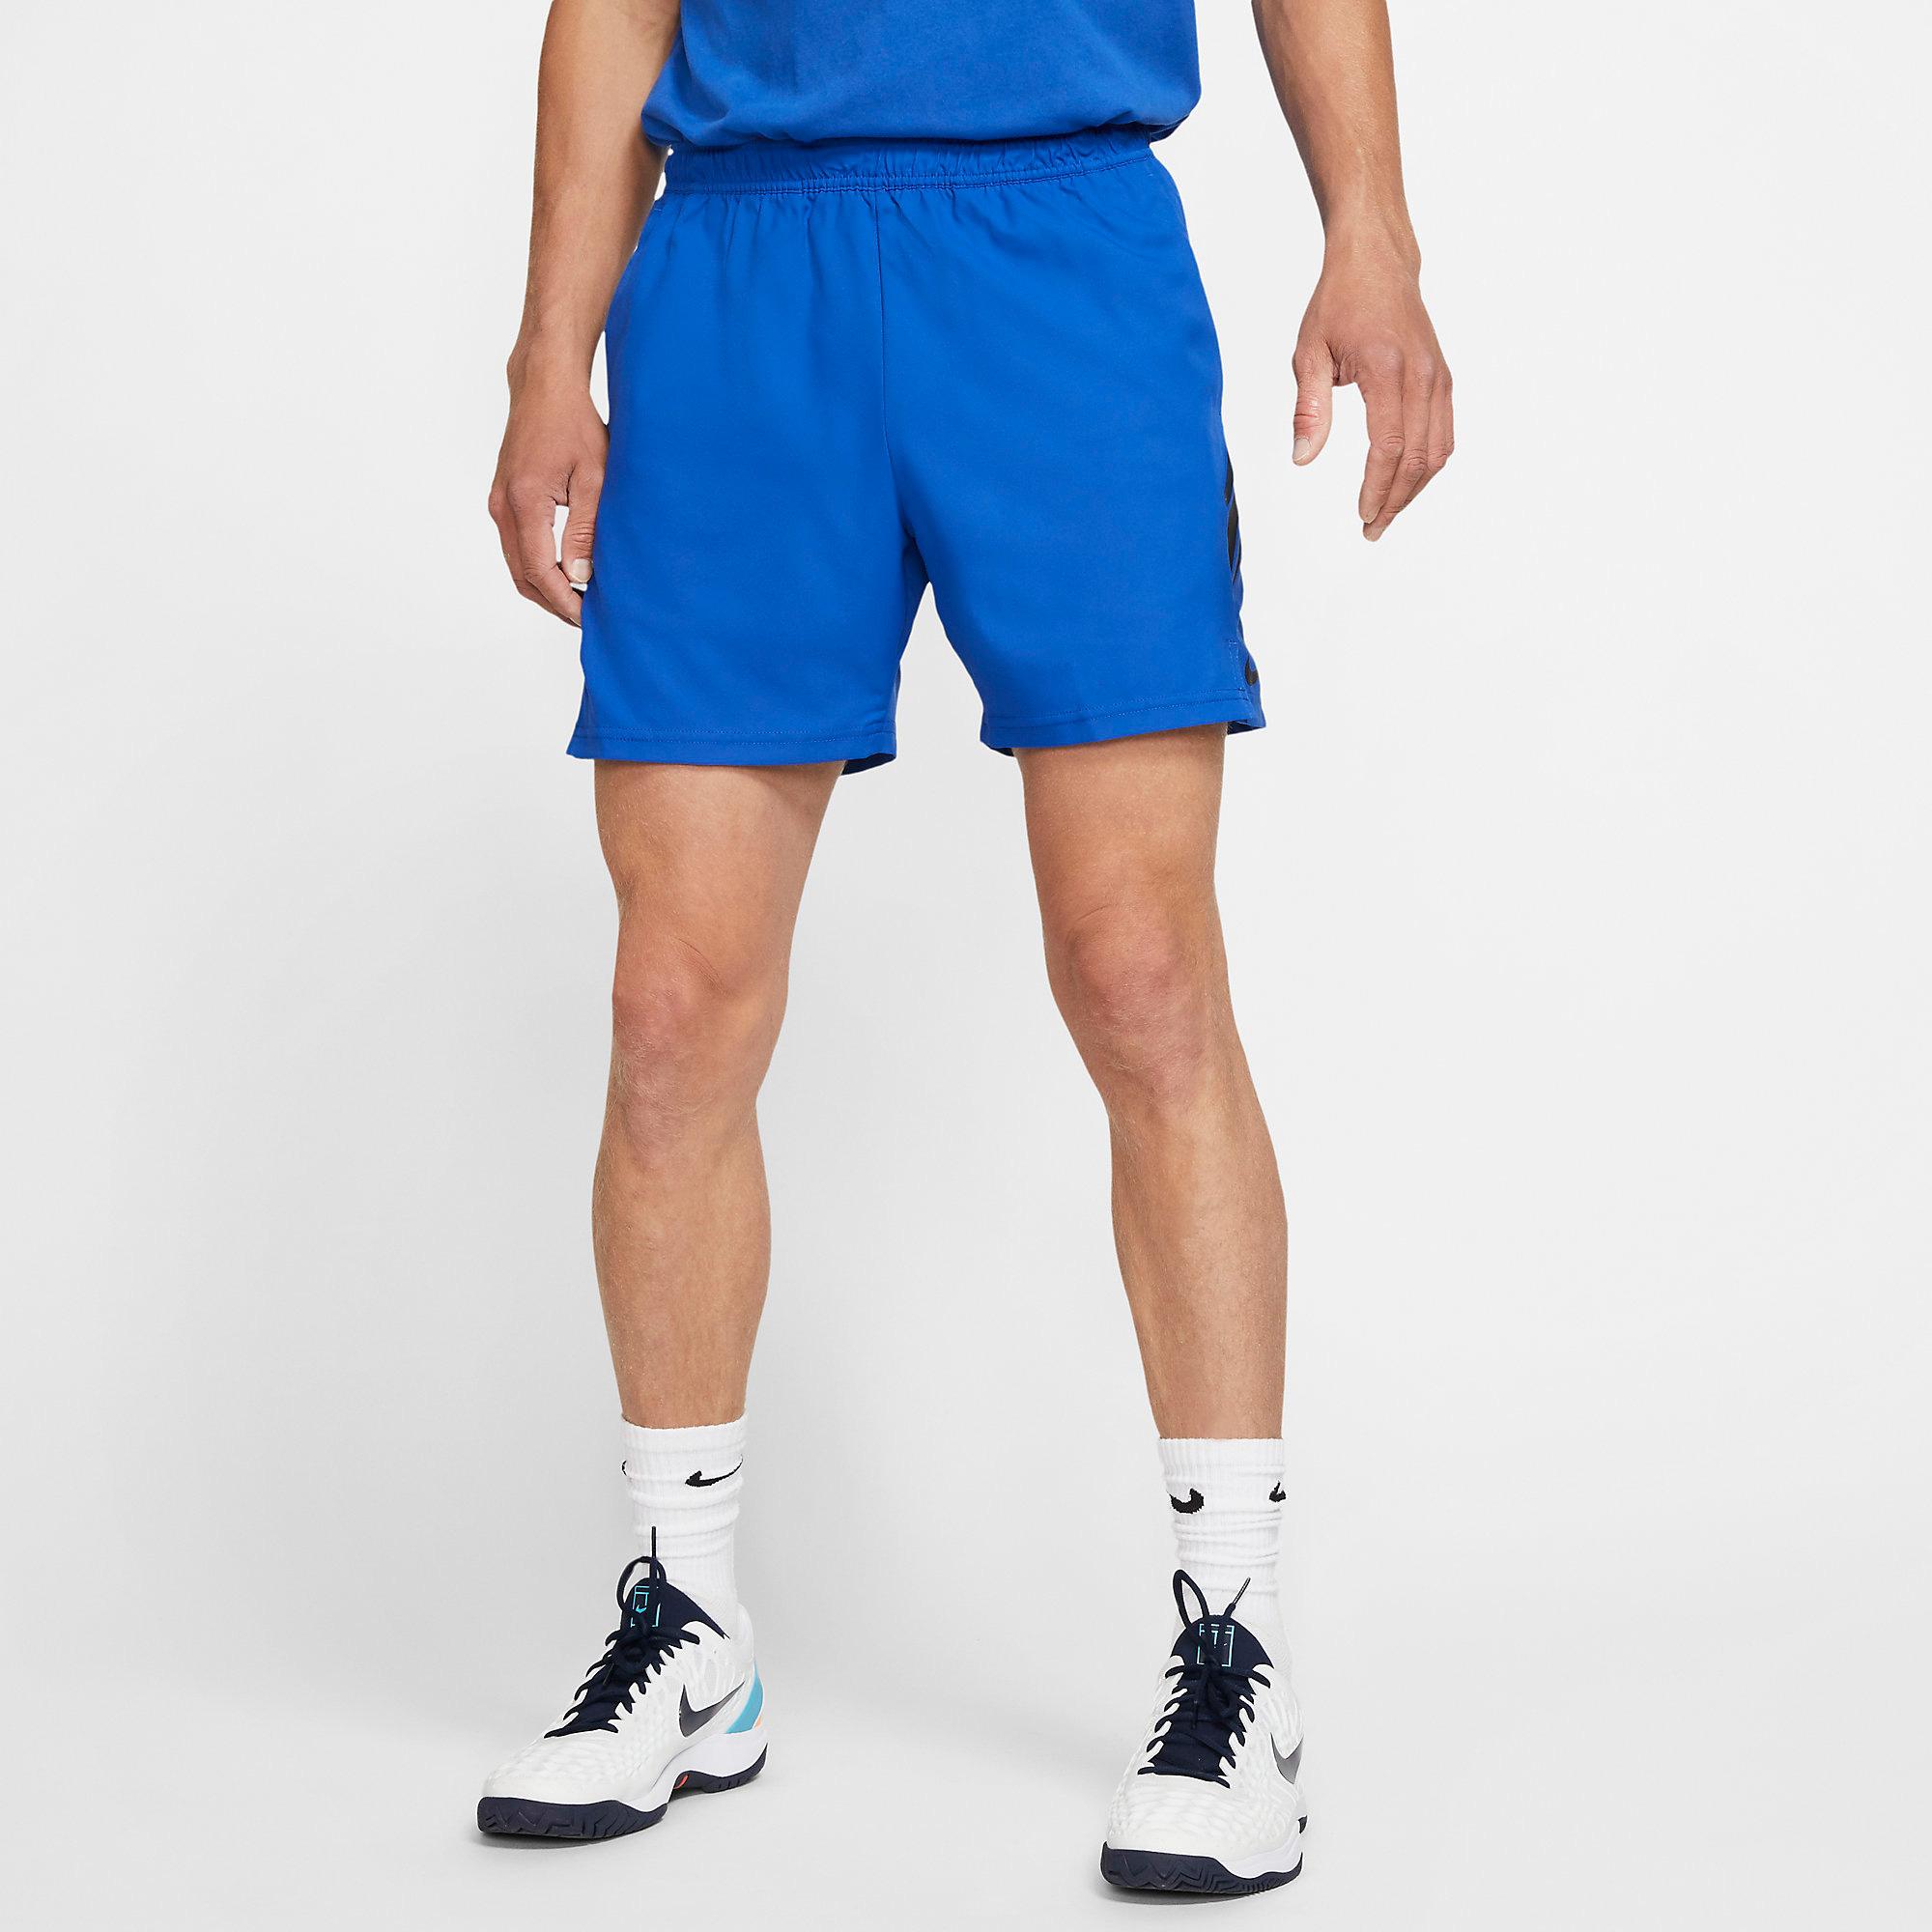 Nike Mens Dri-FIT 7 Inch Tennis Shorts - Game Royal/Black - Tennisnuts.com